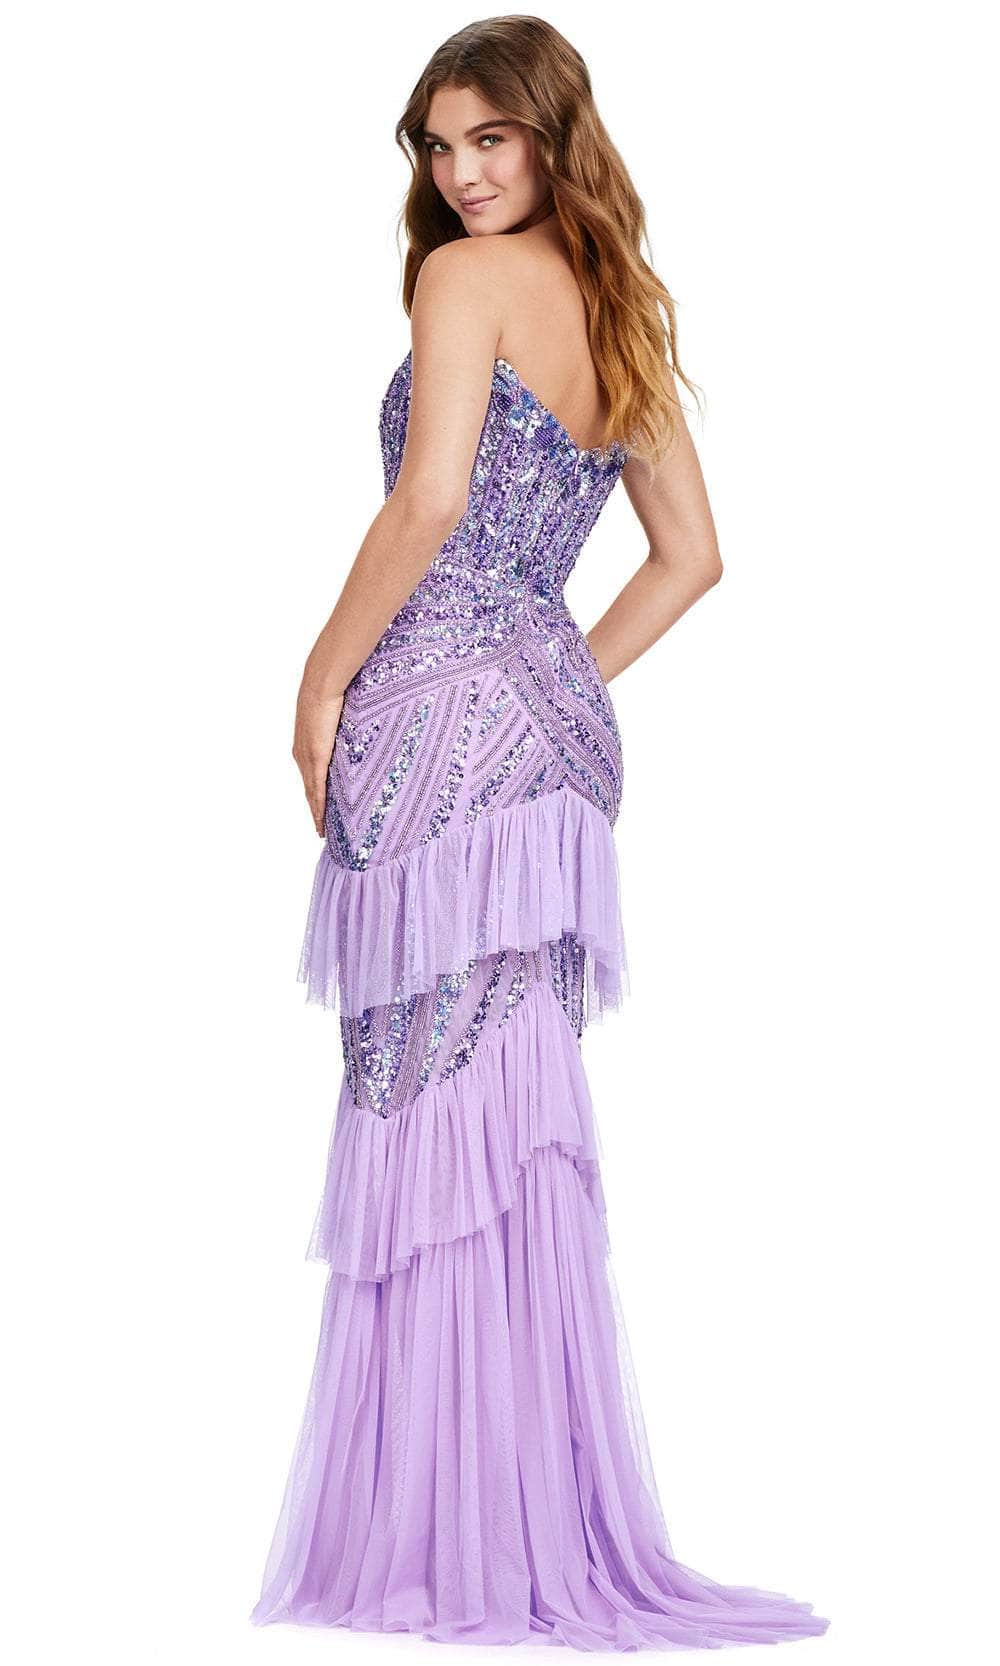 Ashley Lauren 11438 - Ruffle Tiered Prom Dress Prom Dresses